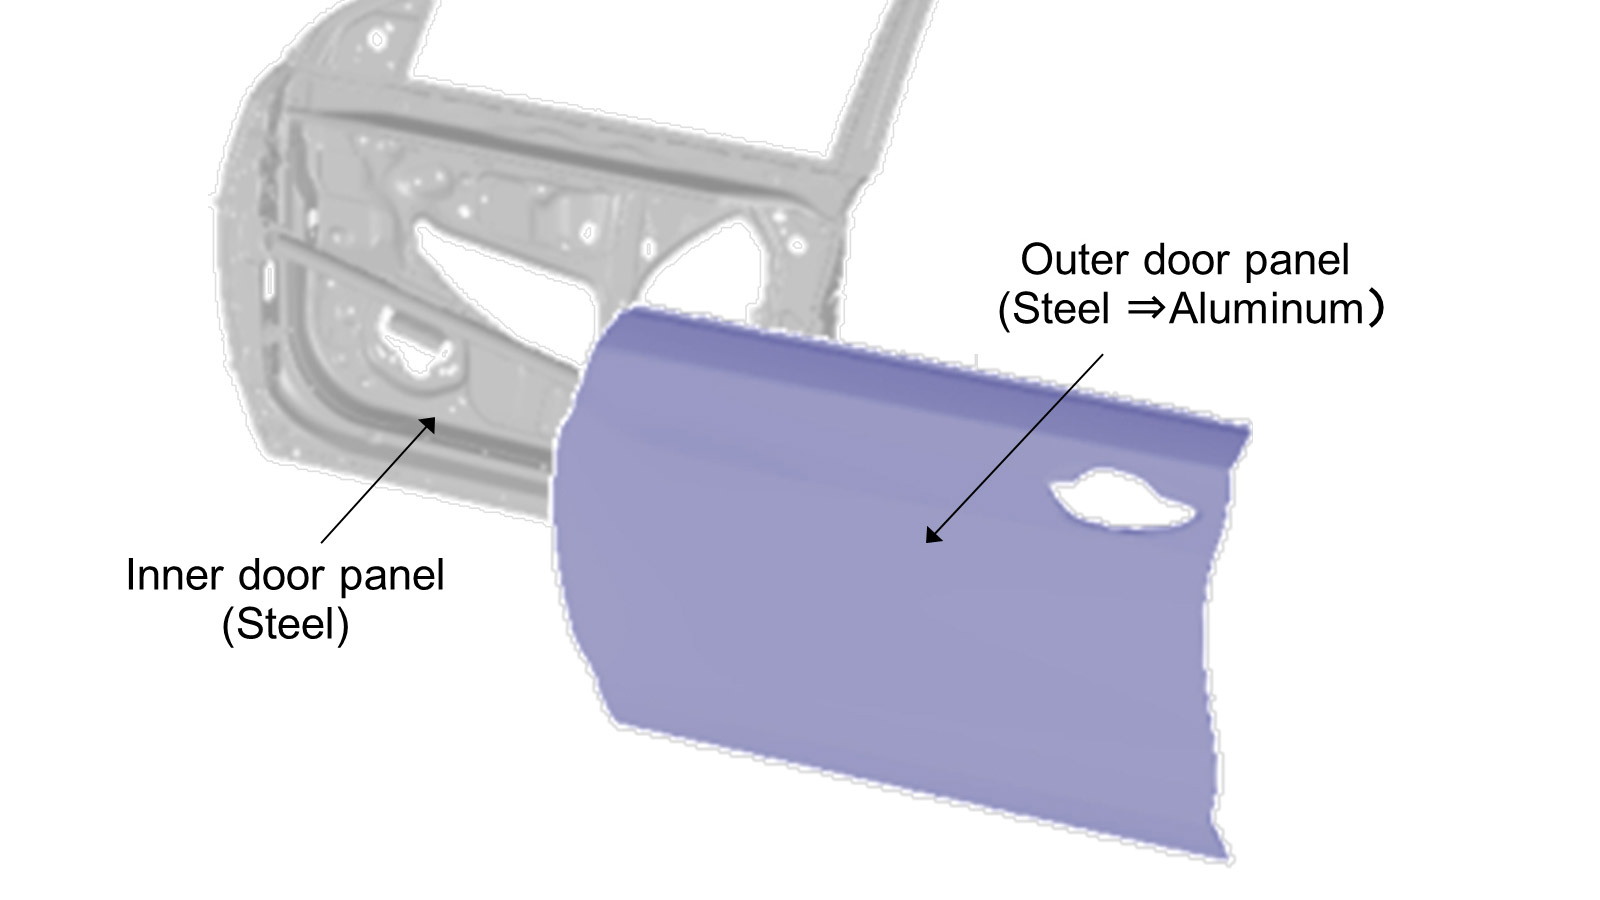 Acura’s new aluminum to steel welding technology